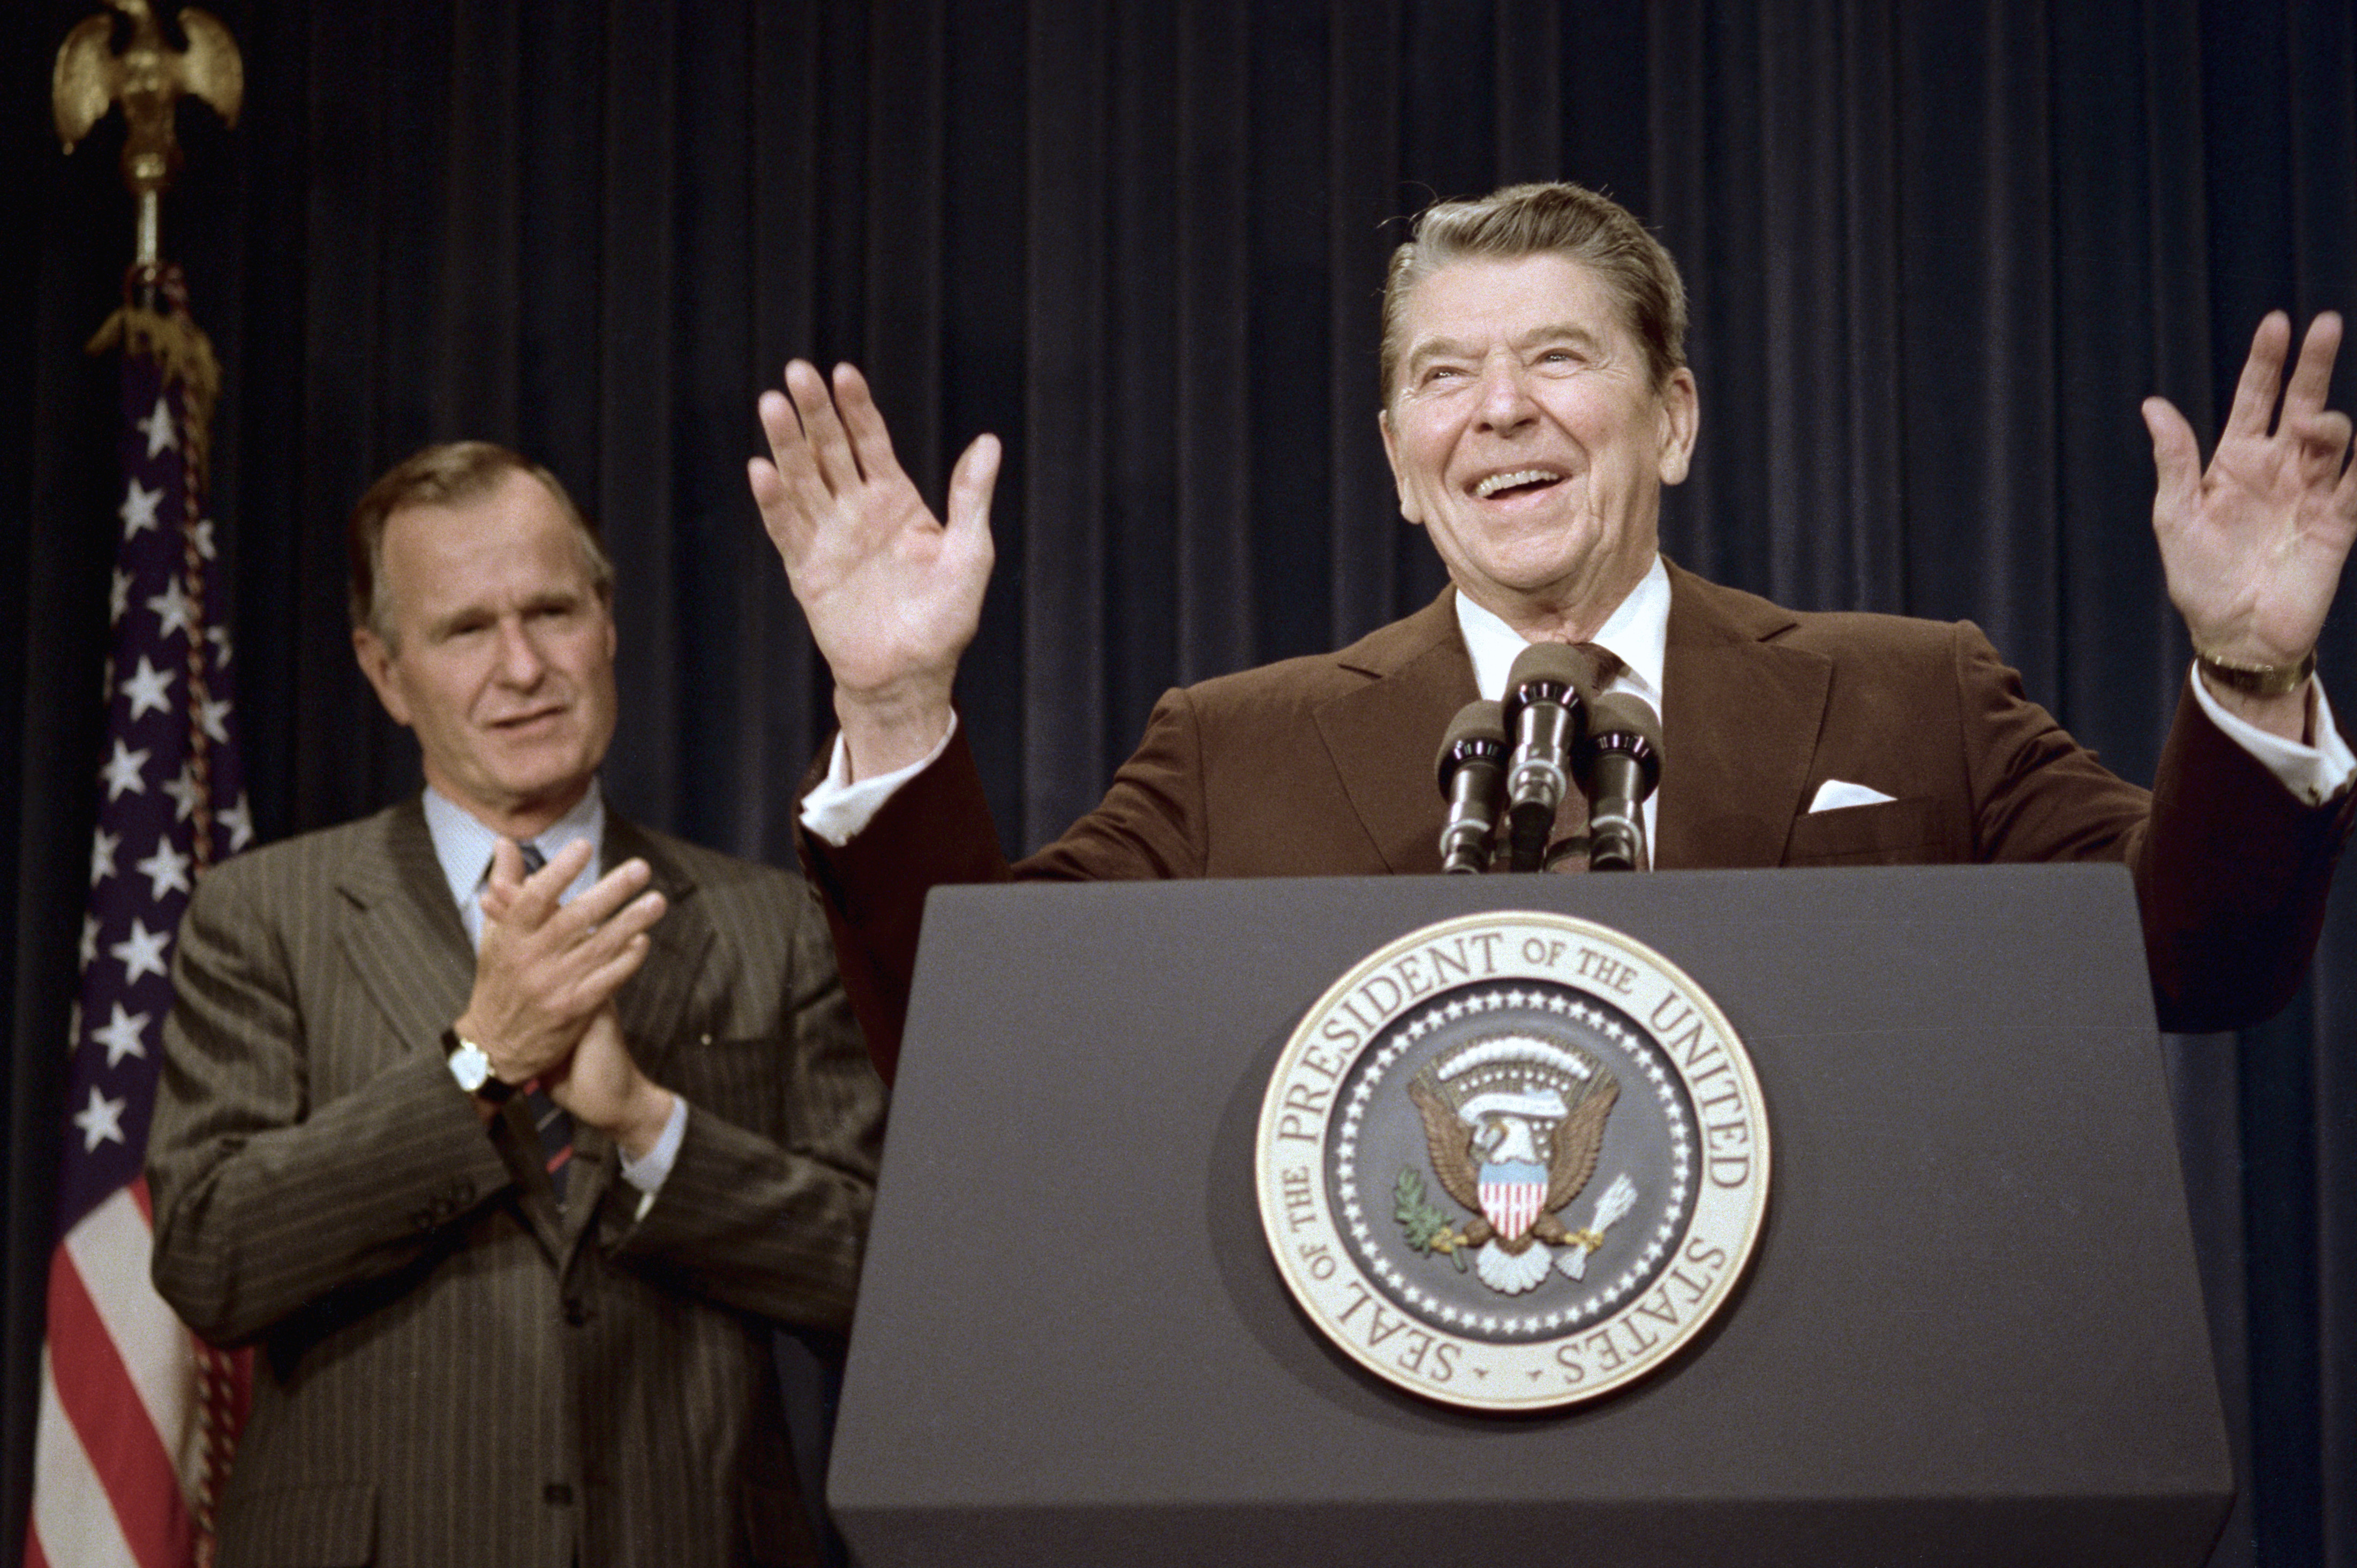 Ronald Reagan with George Bush